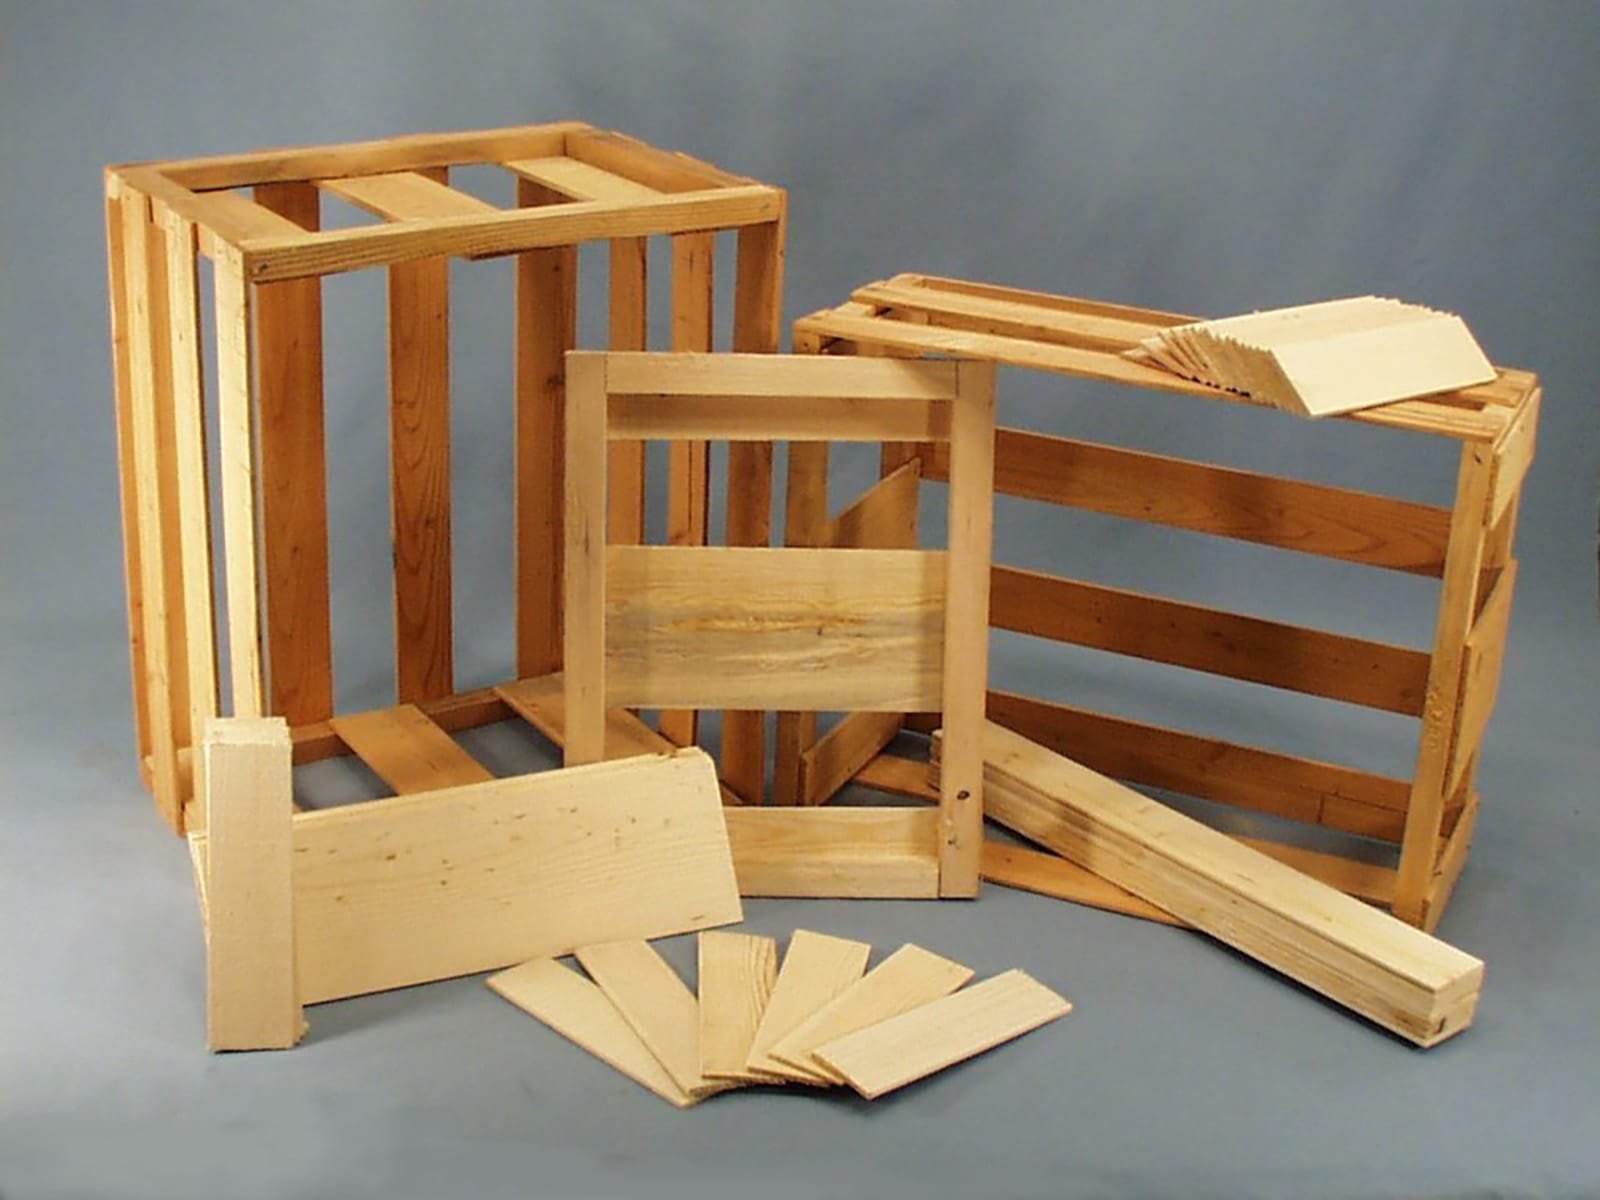 Wood - Produce Crates